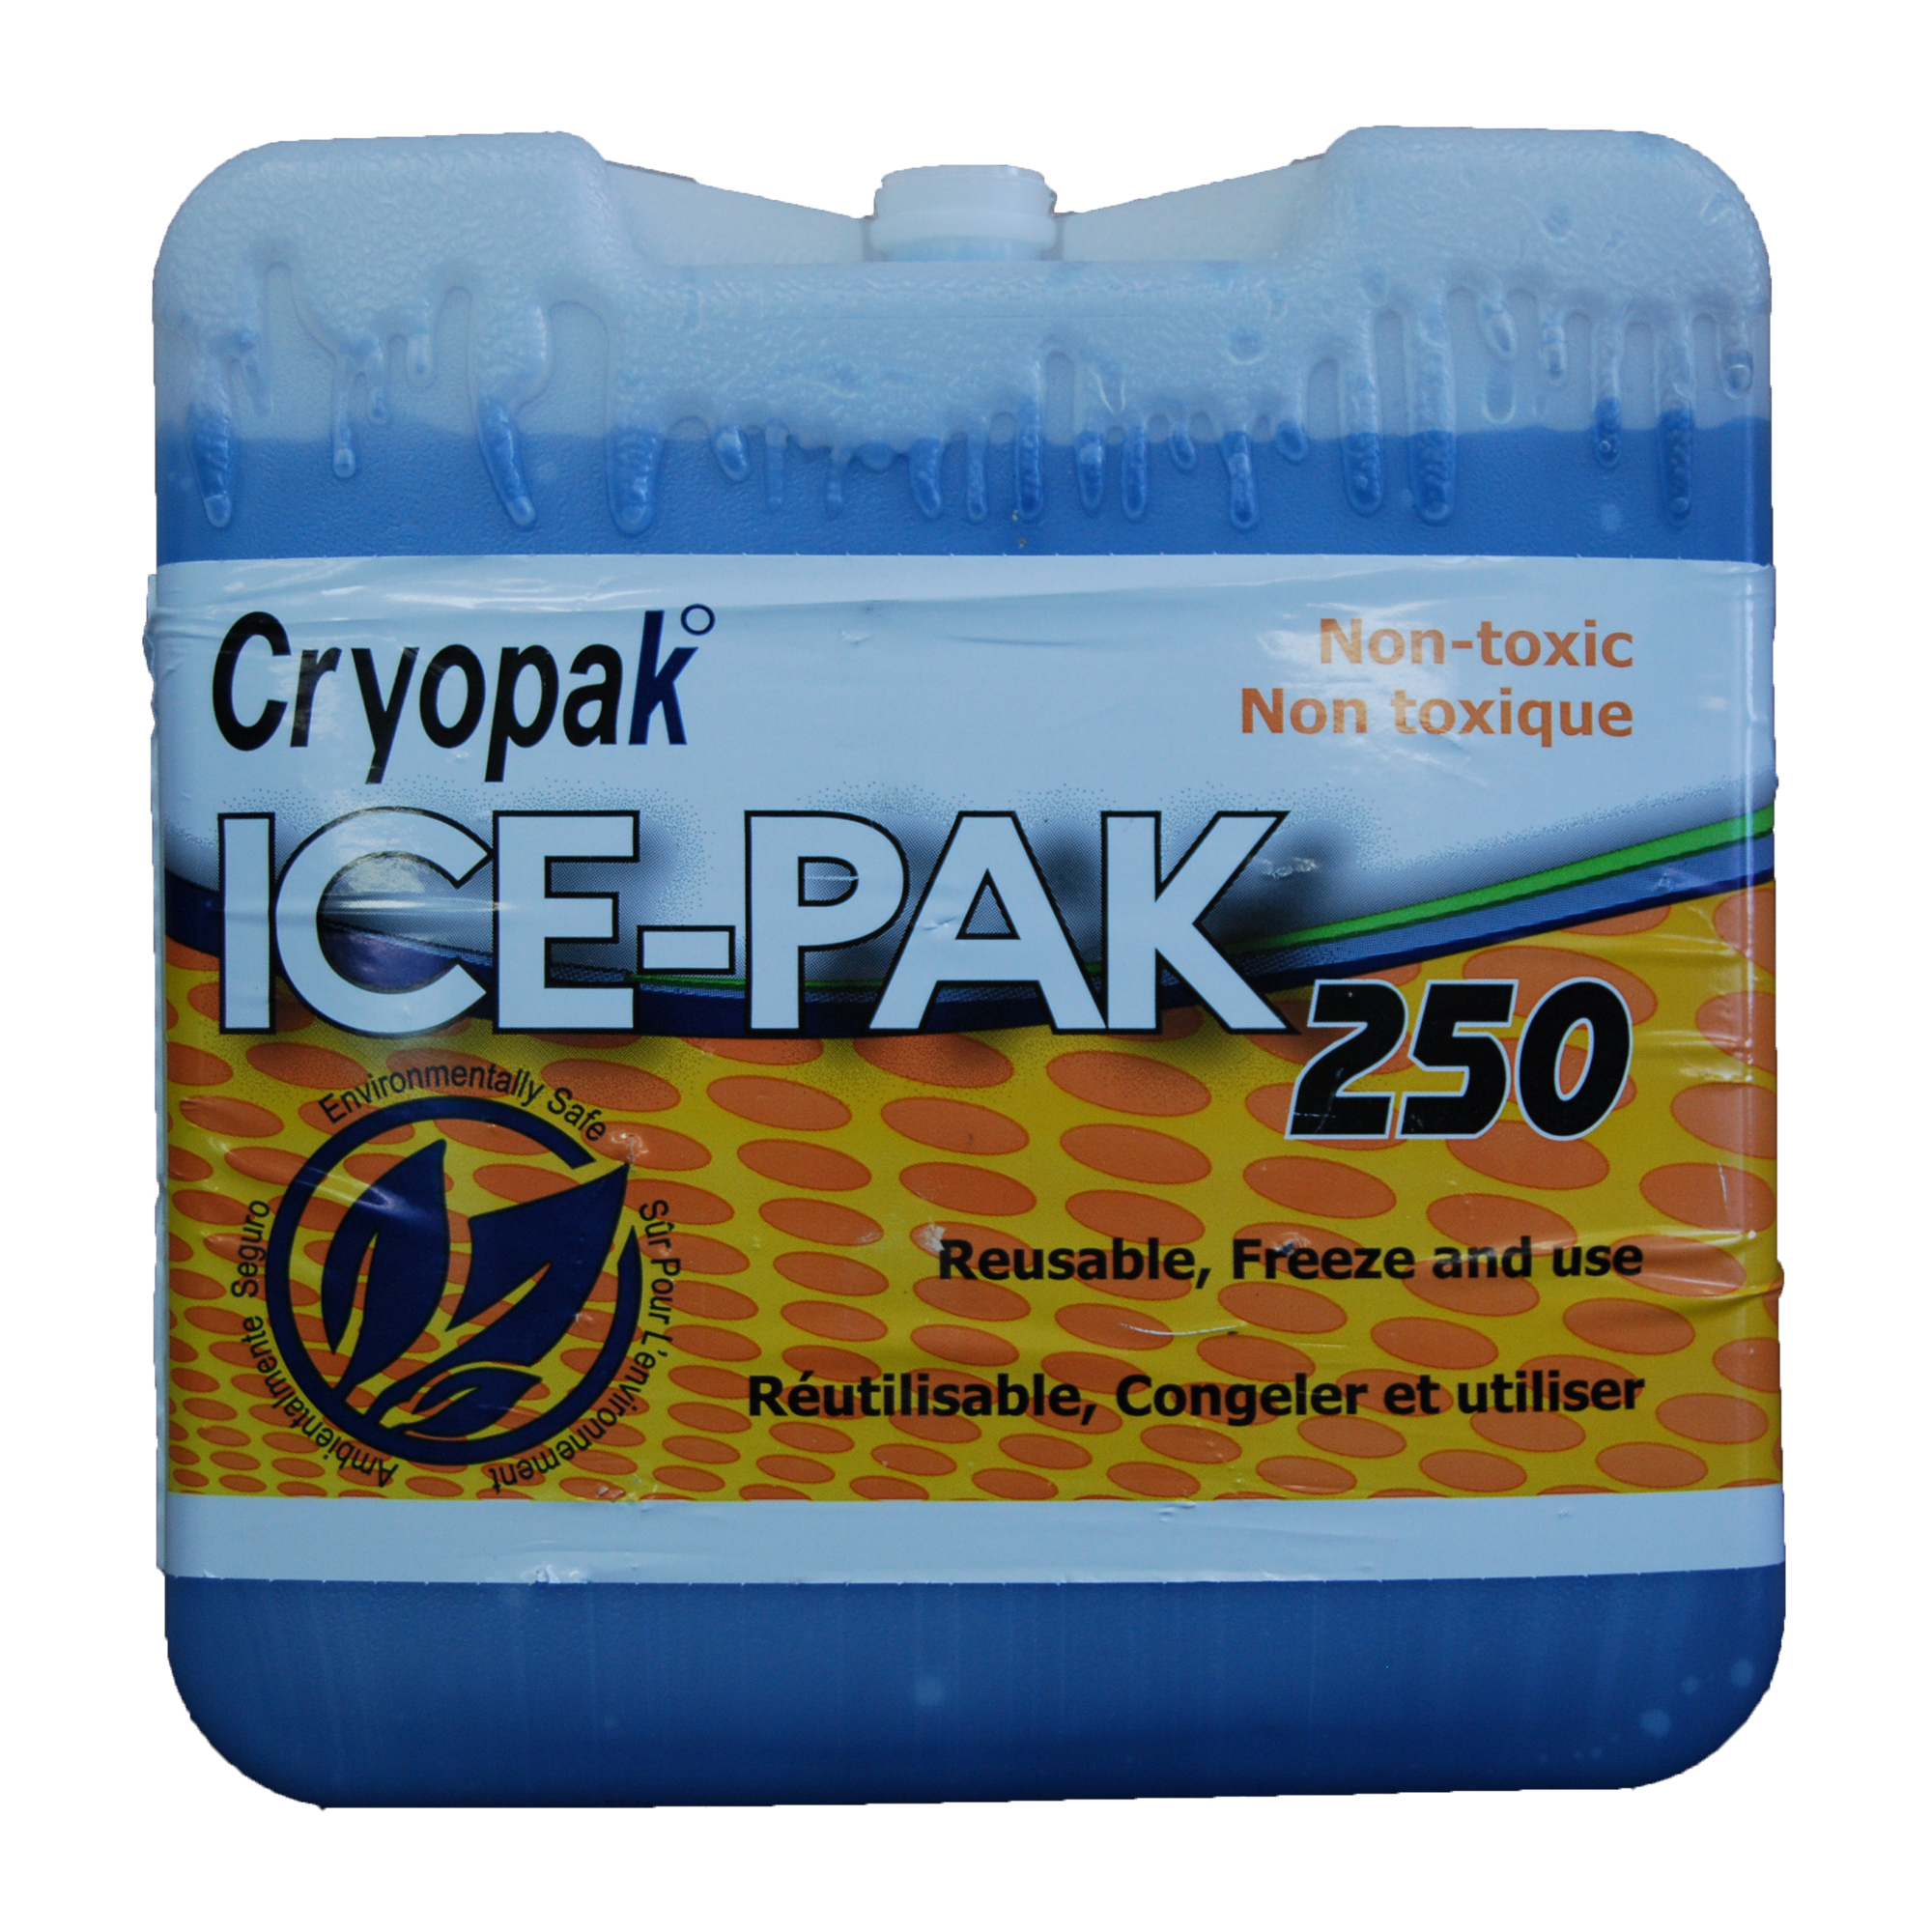 ICE-PAK 250